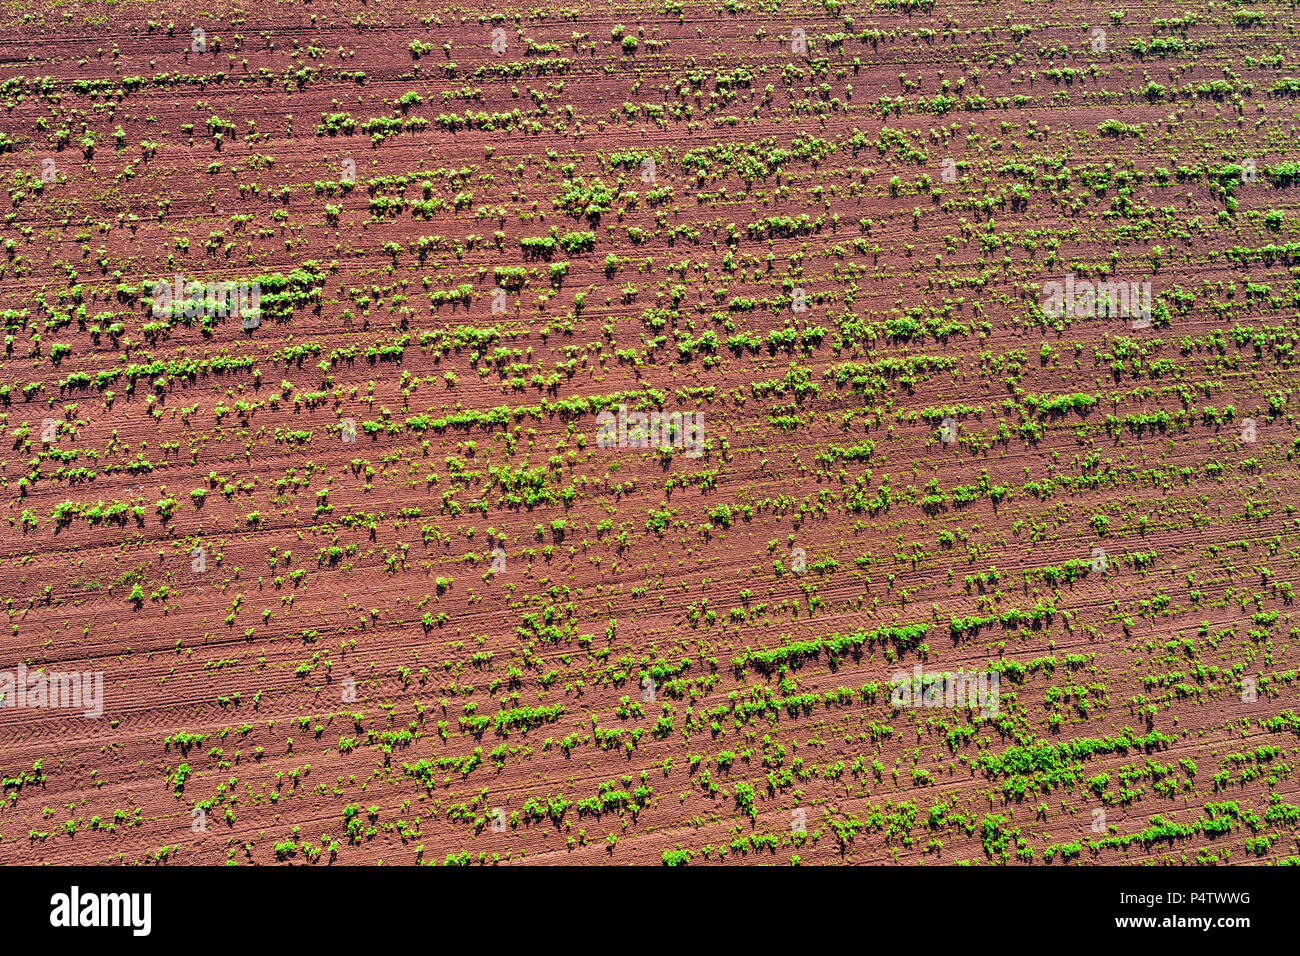 Germania Baden-Wuerttemberg, Rems-Murr-Kreis, vista aerea del campo con piante Foto Stock